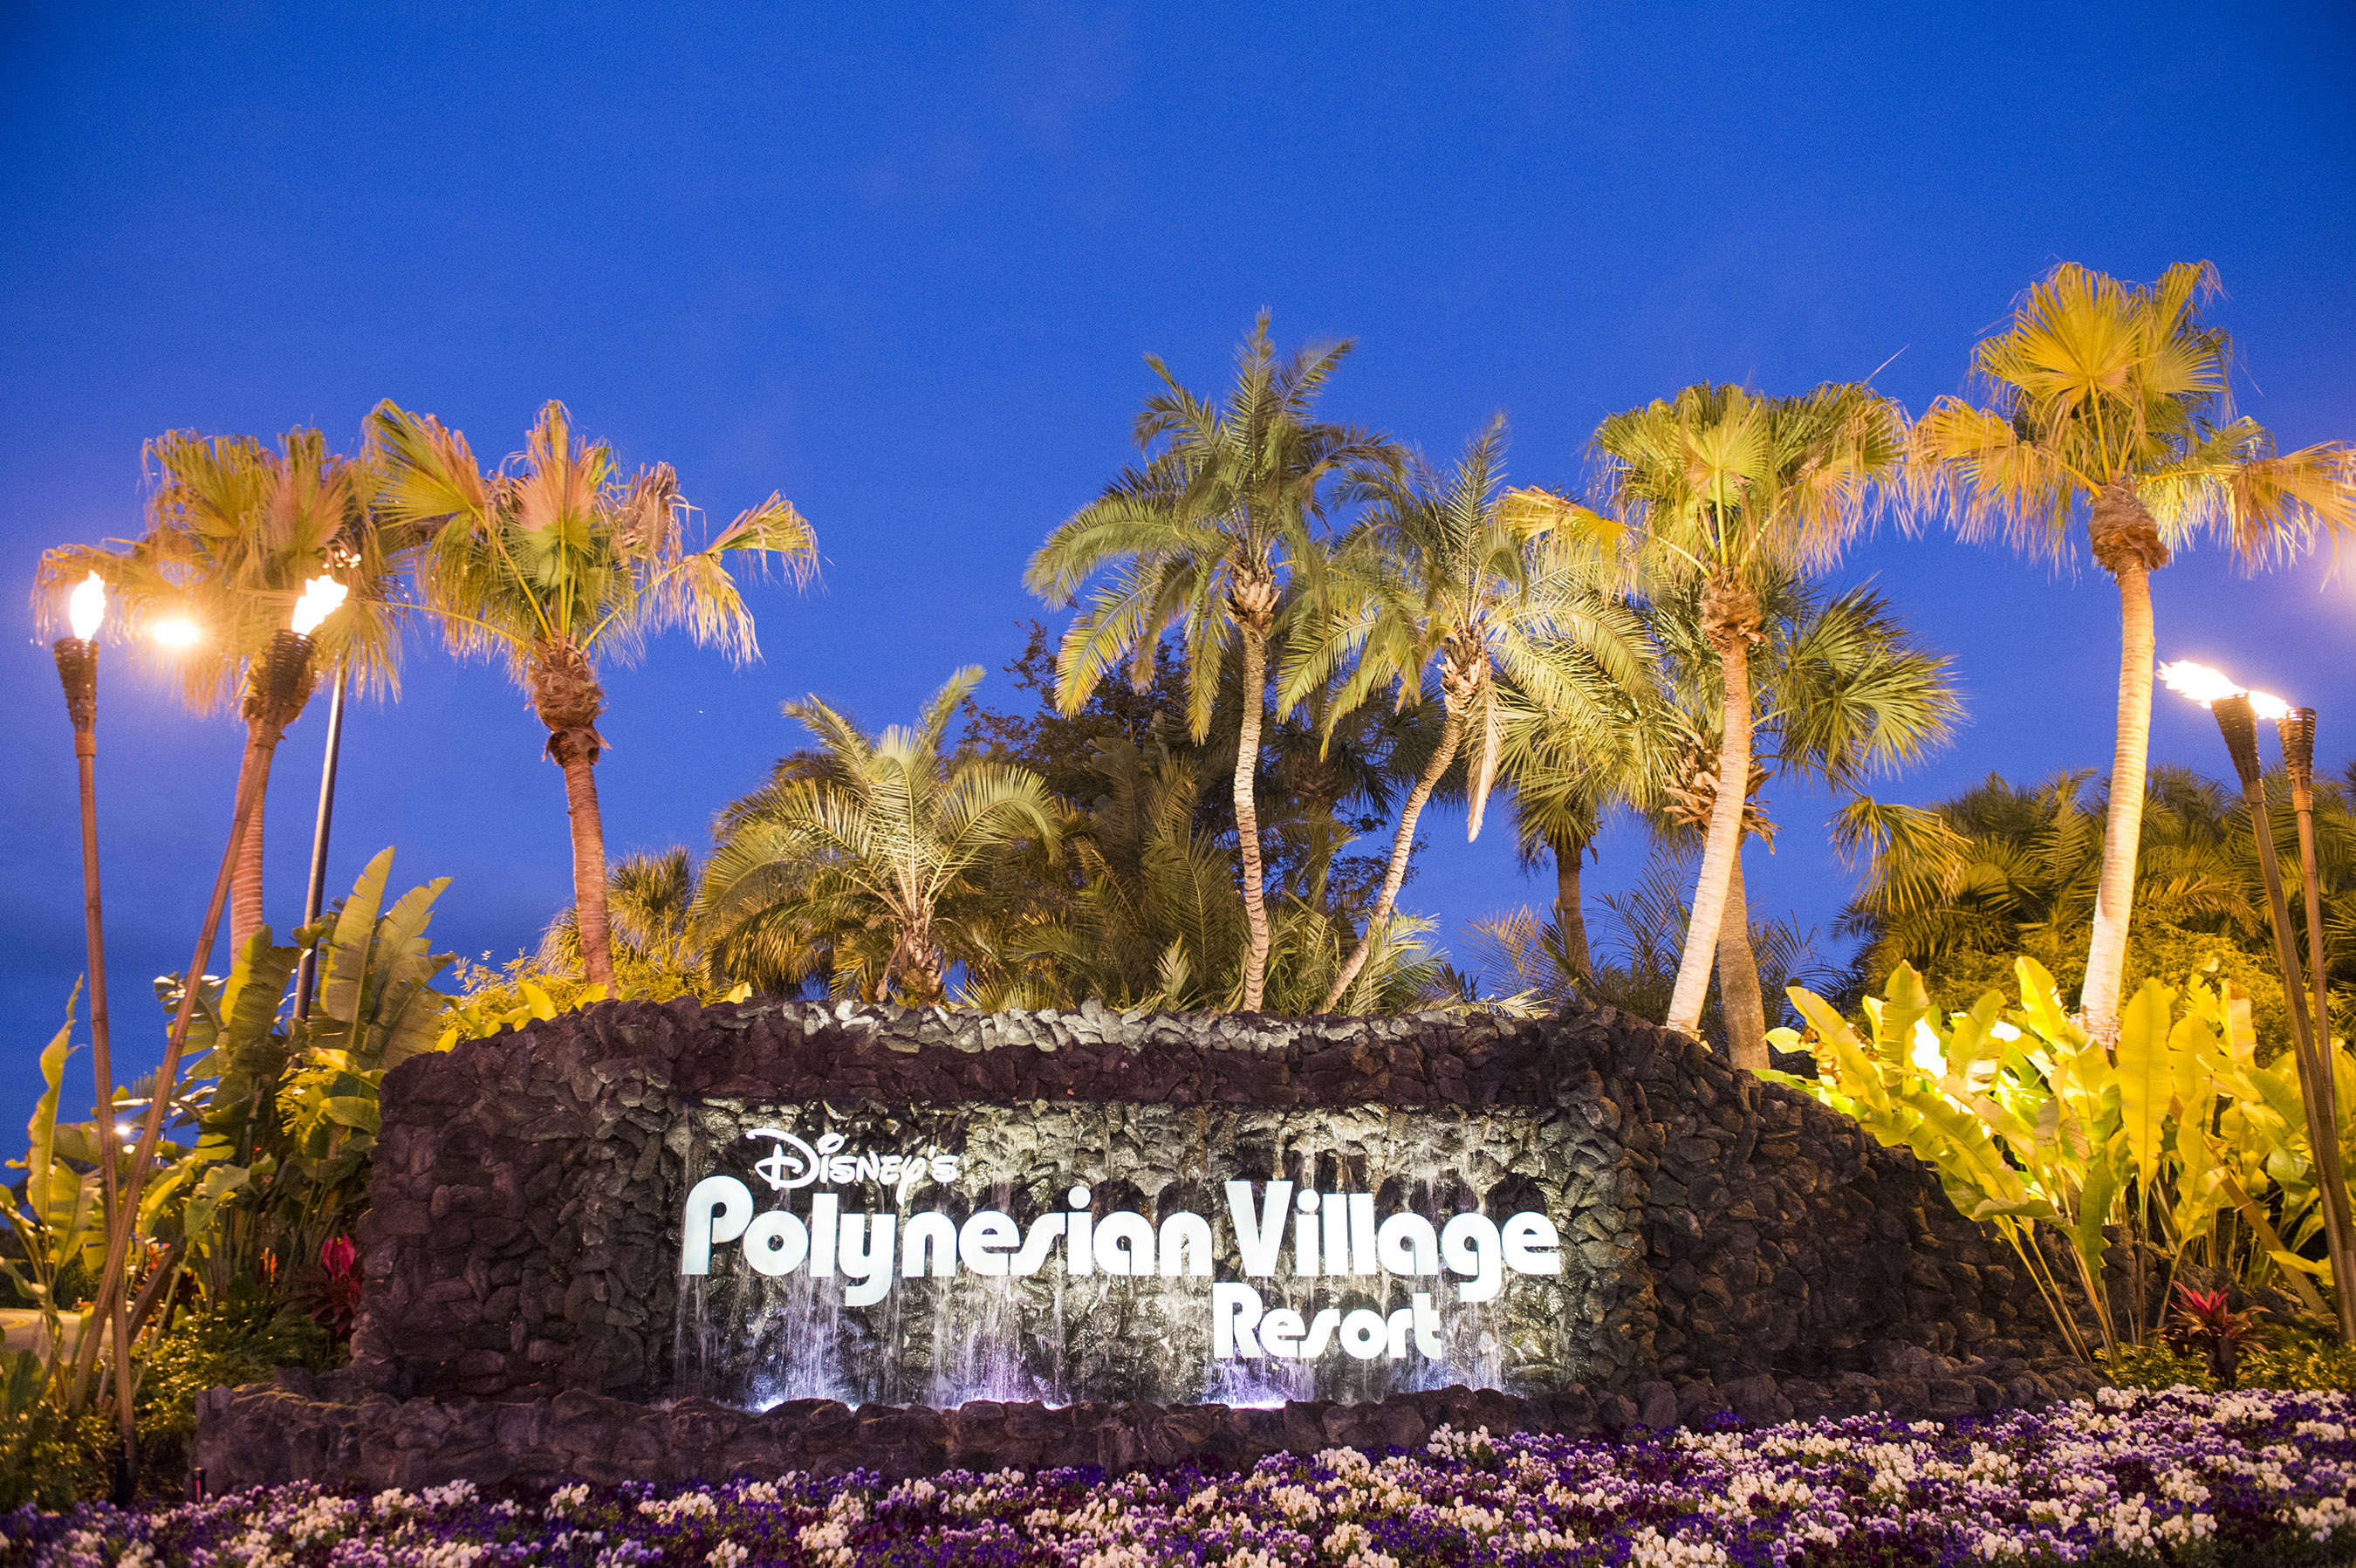 Disney's Polynesian Village Resort Sign at Walt Disney World